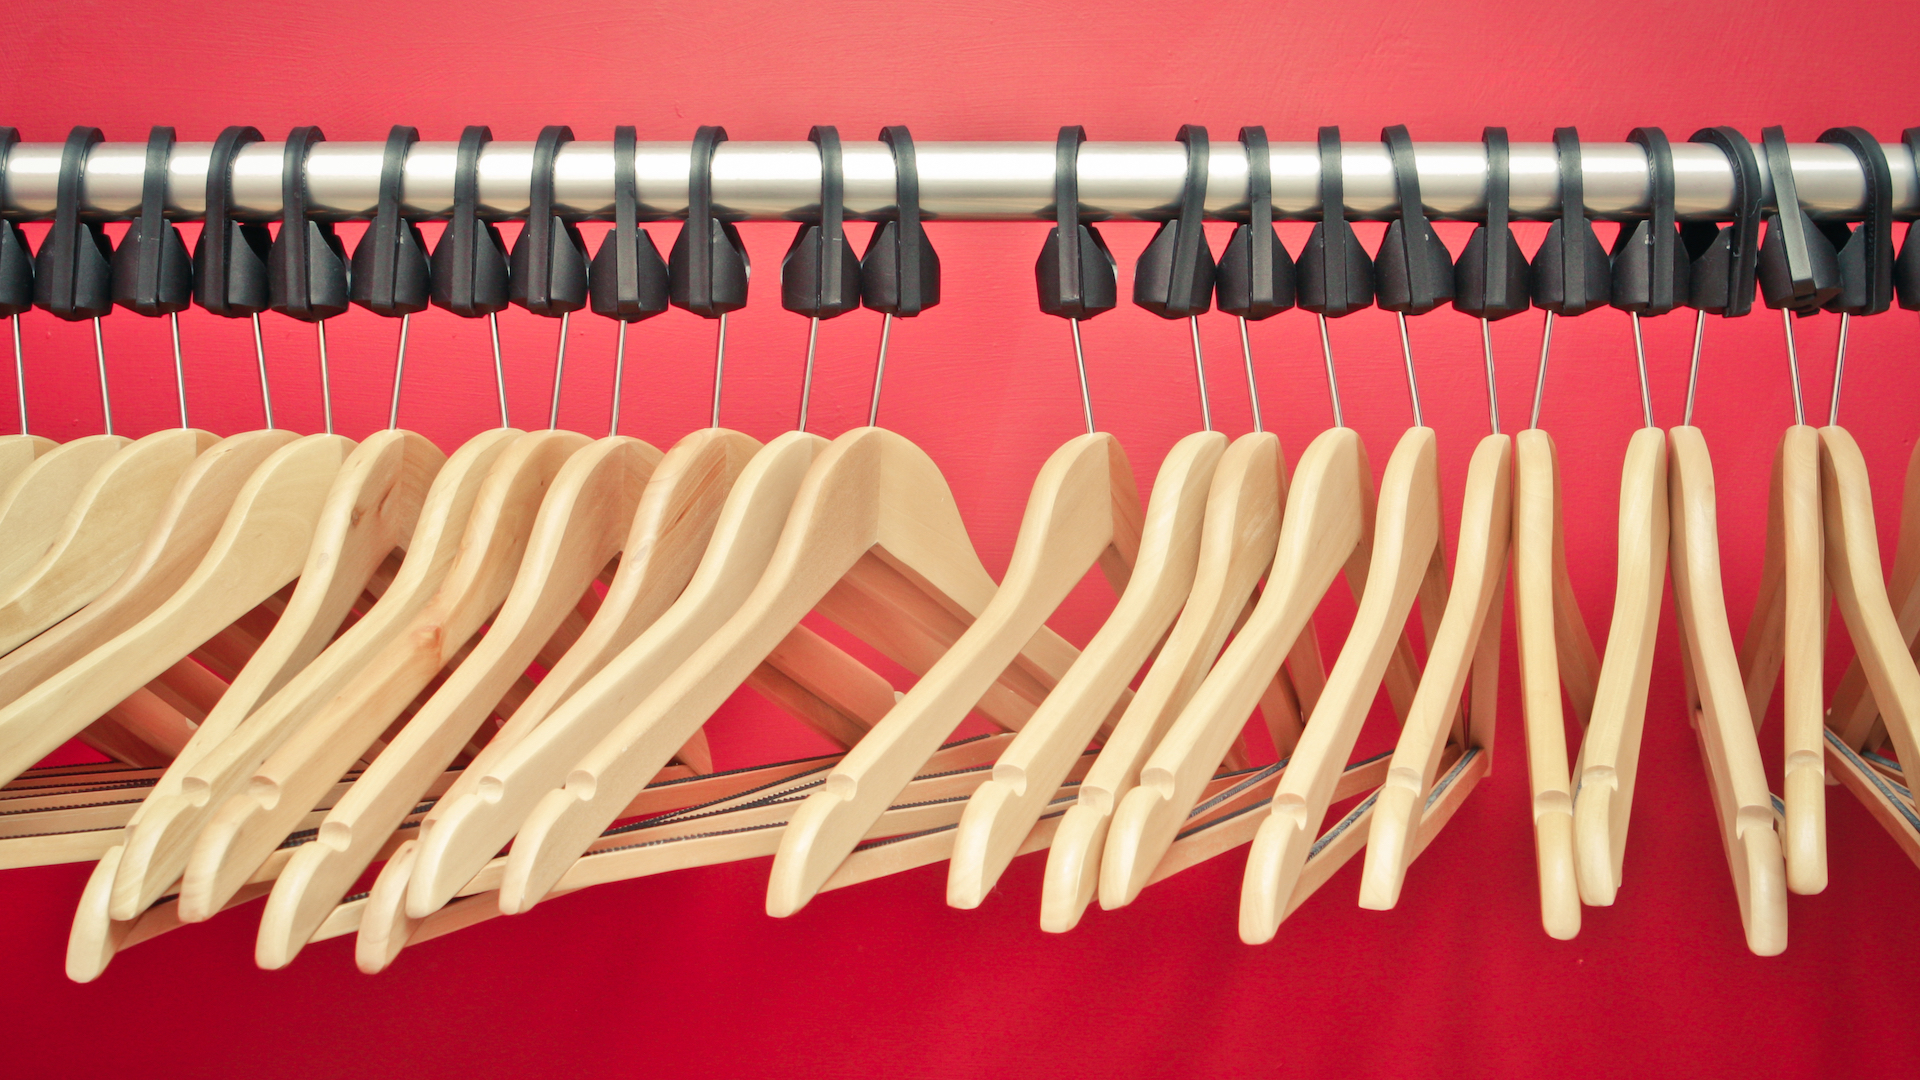 A clothing rail full of empty hangers